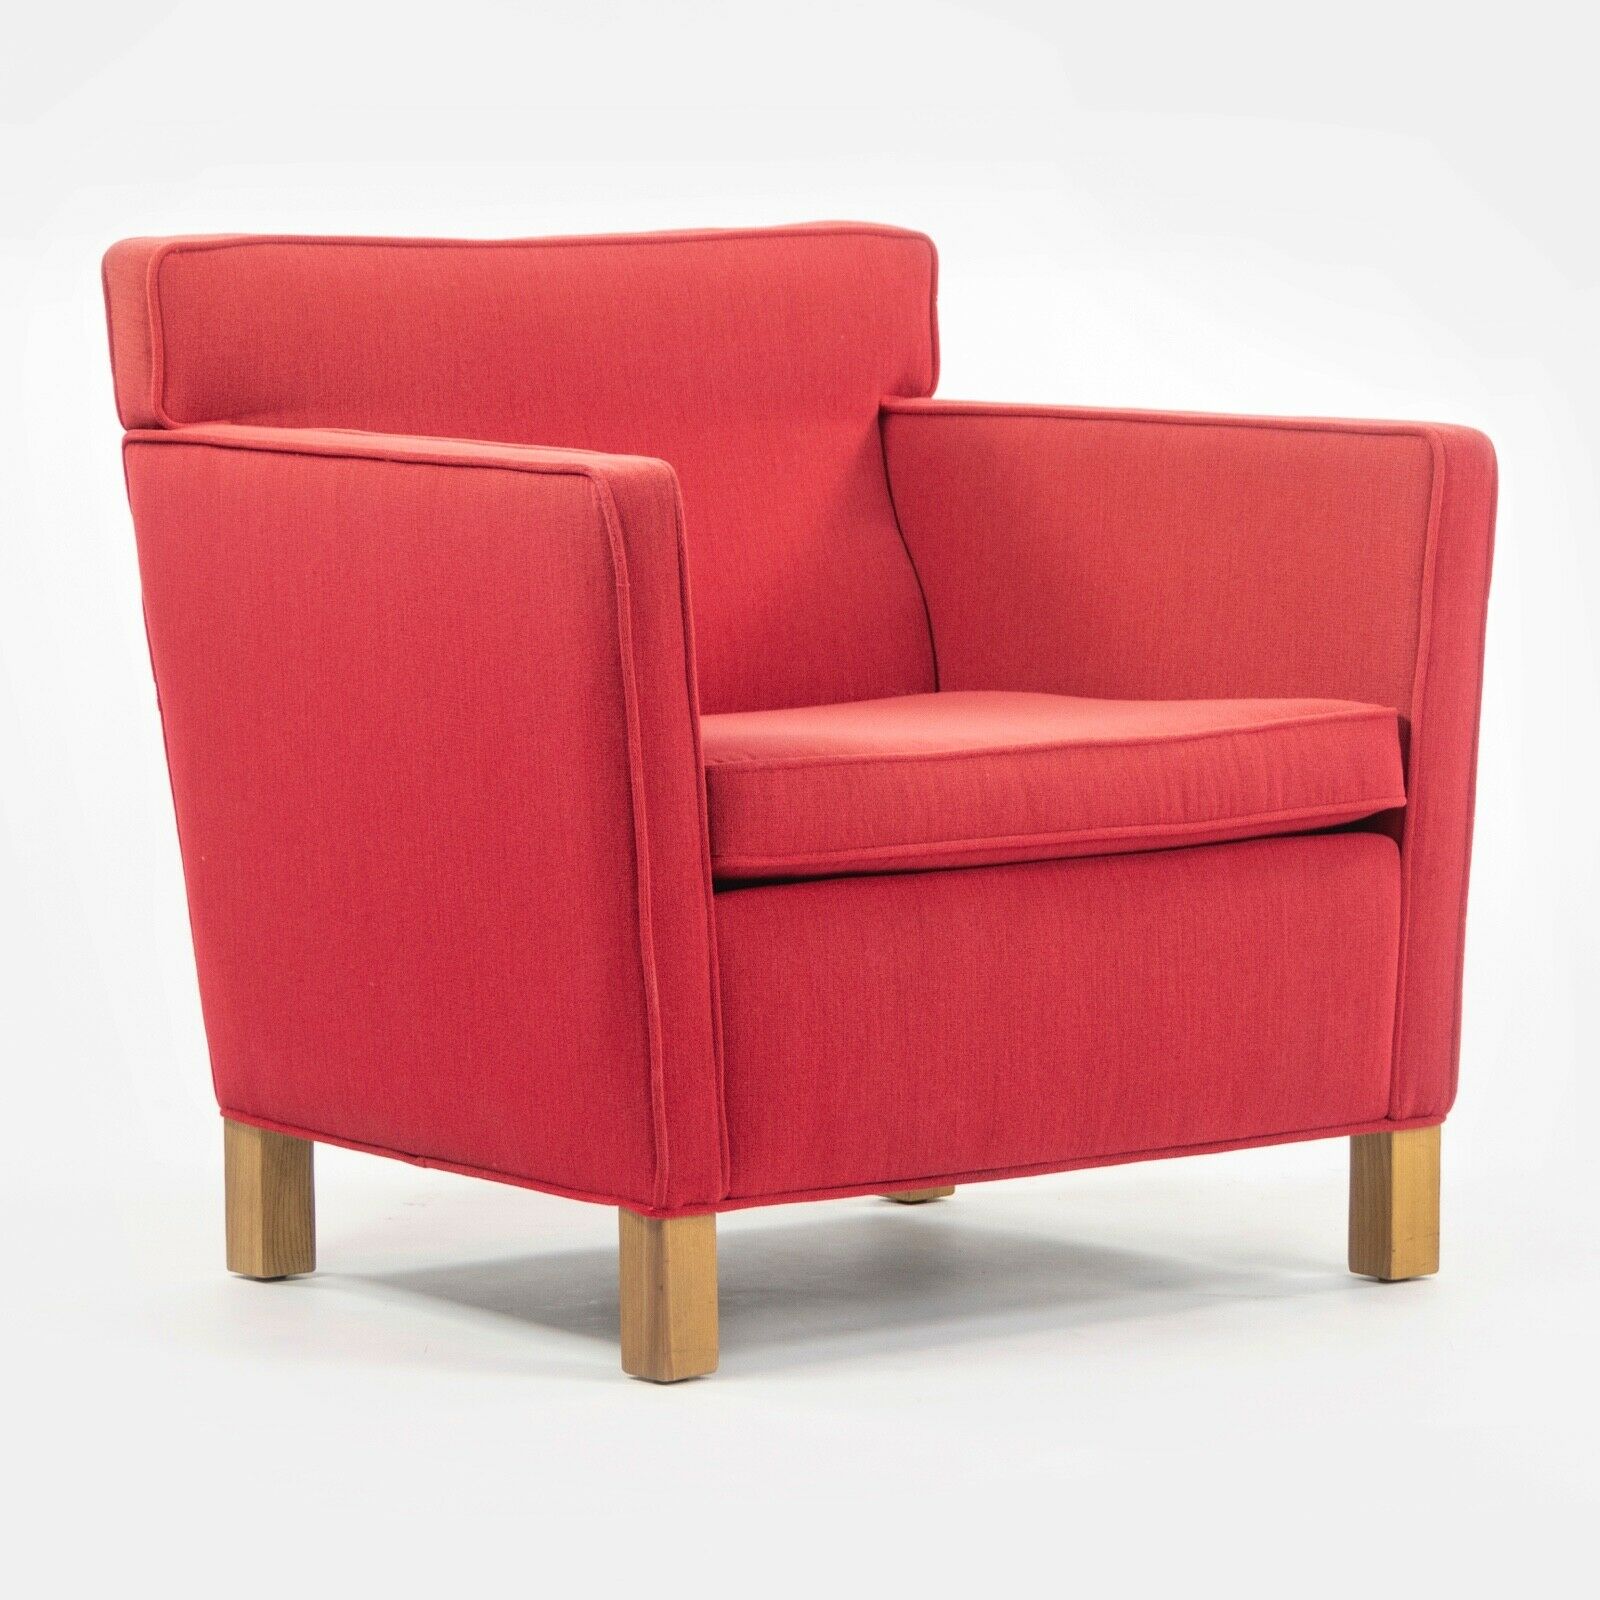 SOLD 2007 Pair Original Knoll Mies Van Der Rohe Krefeld Lounge Chair Red Fabric